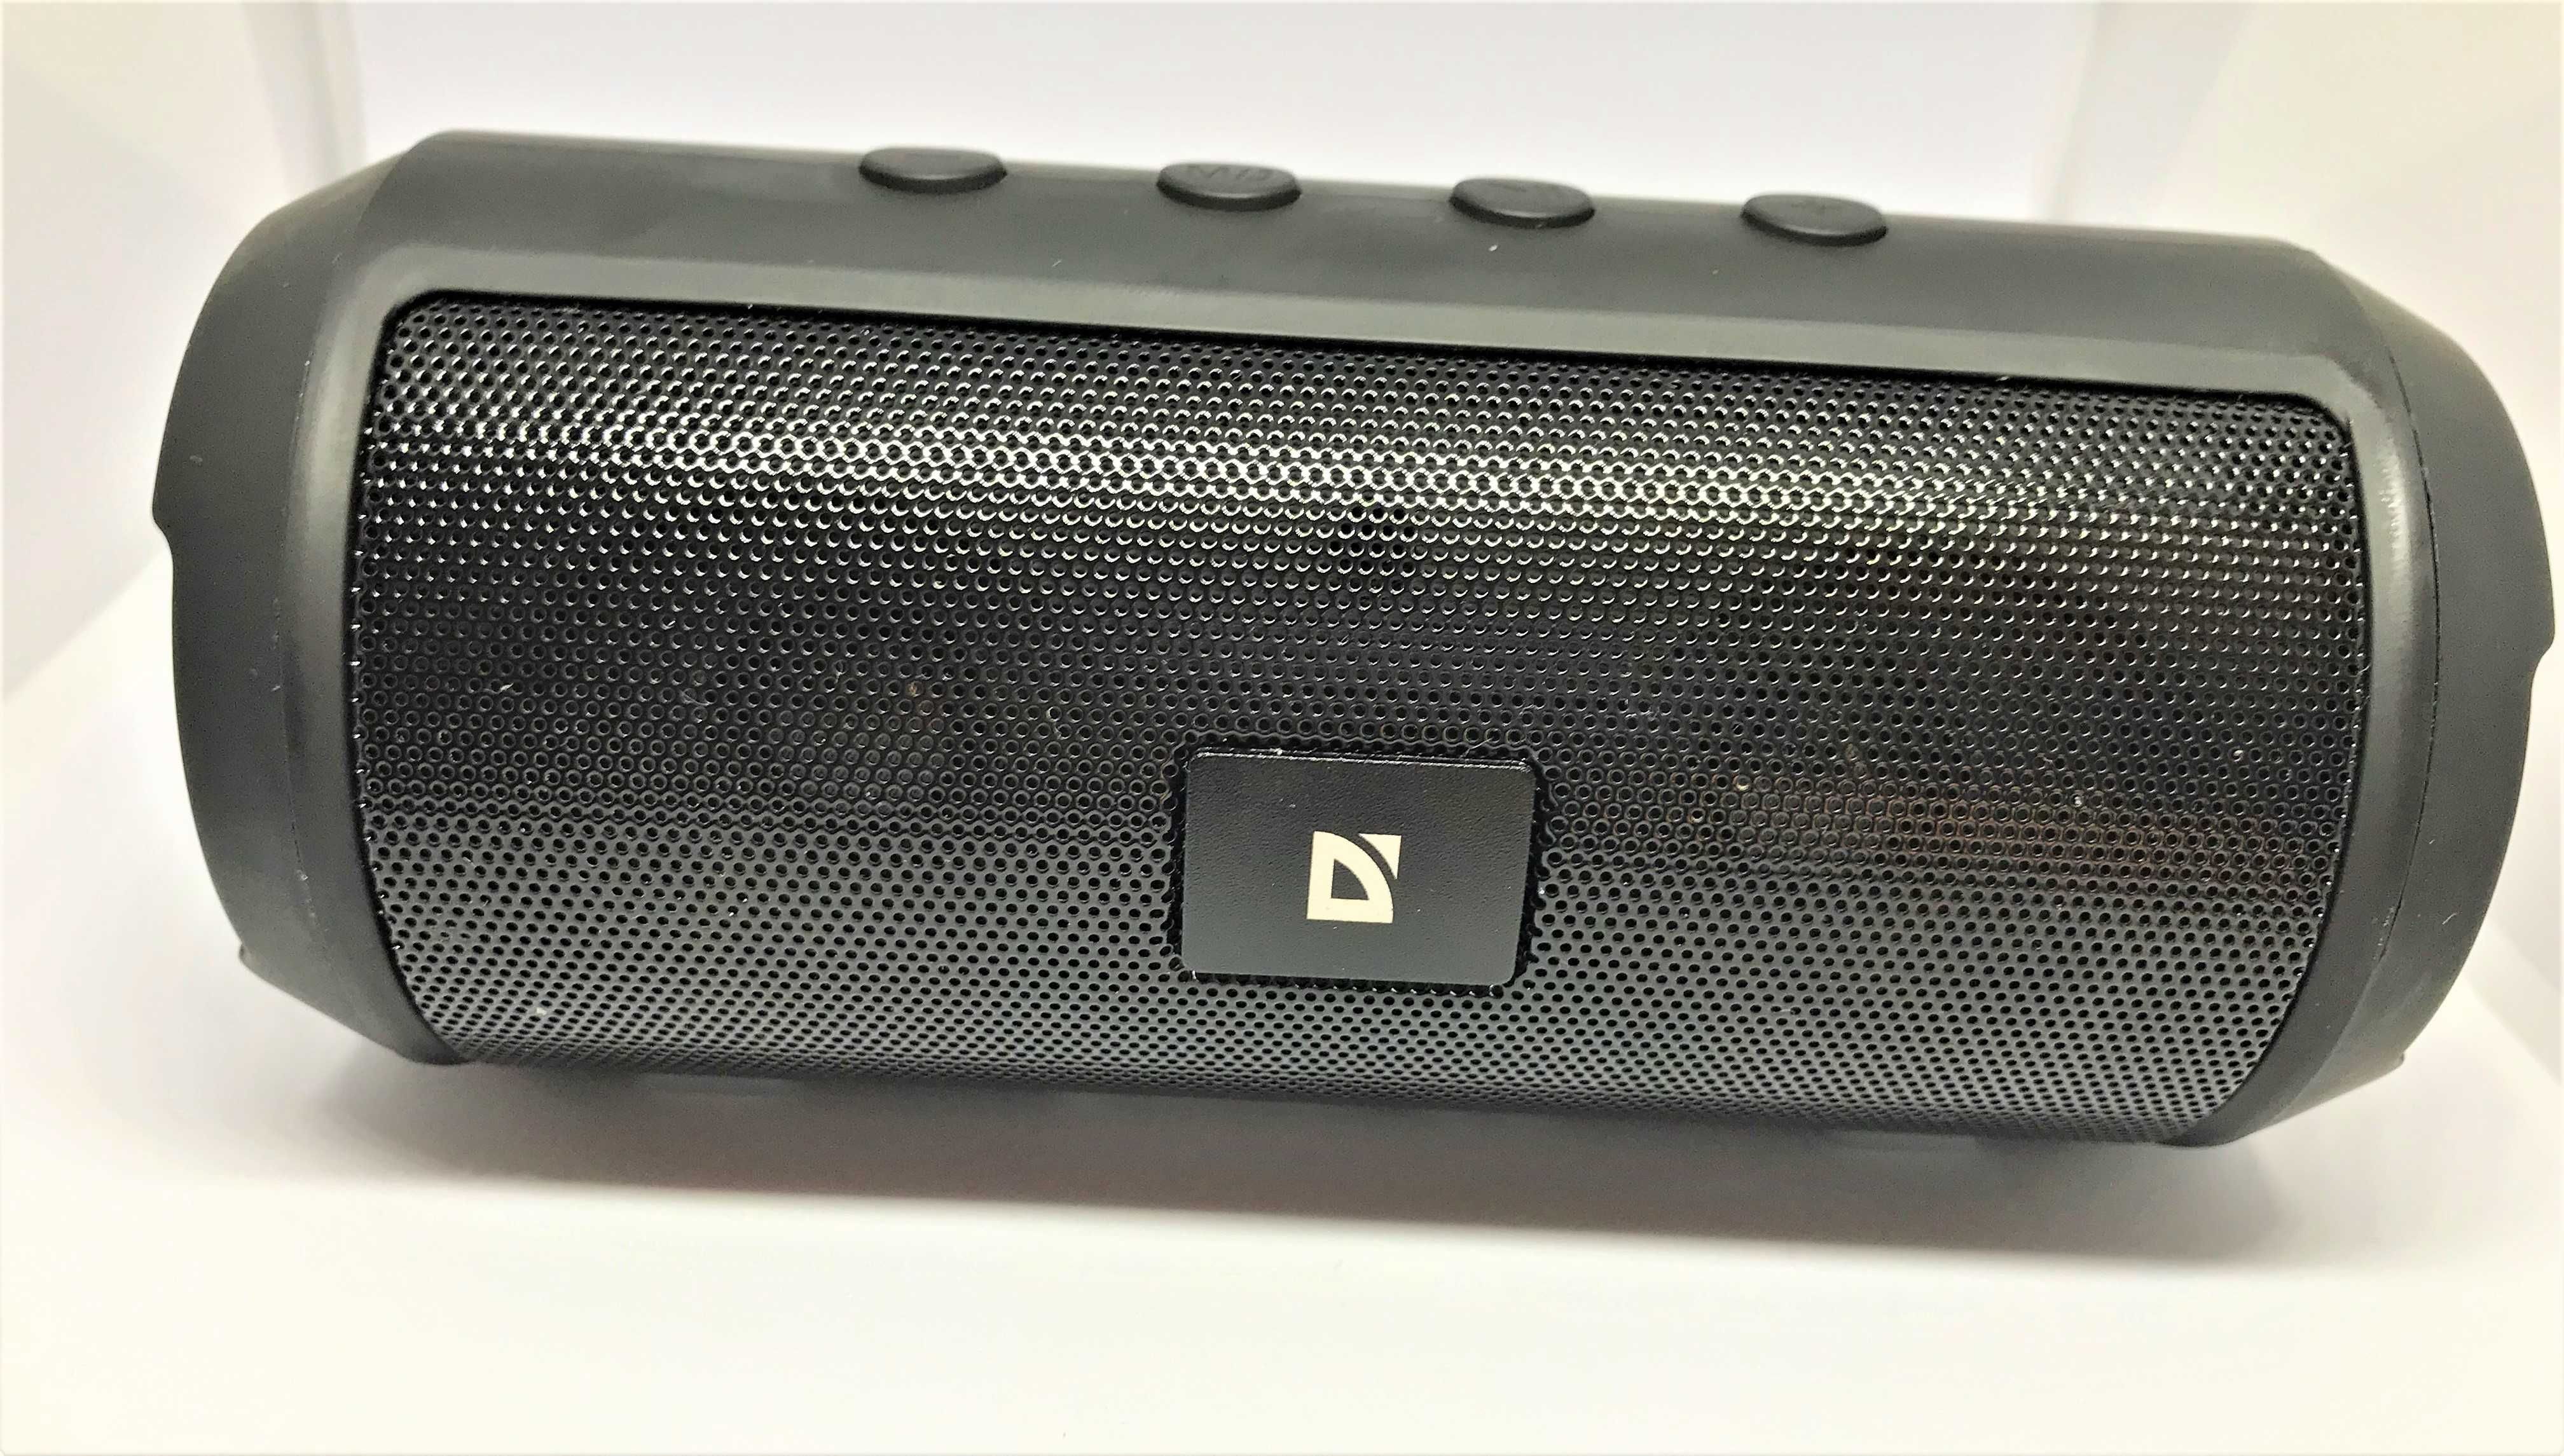 Difuzor, Boxa portabila Bluetooth Defender S500 10 W